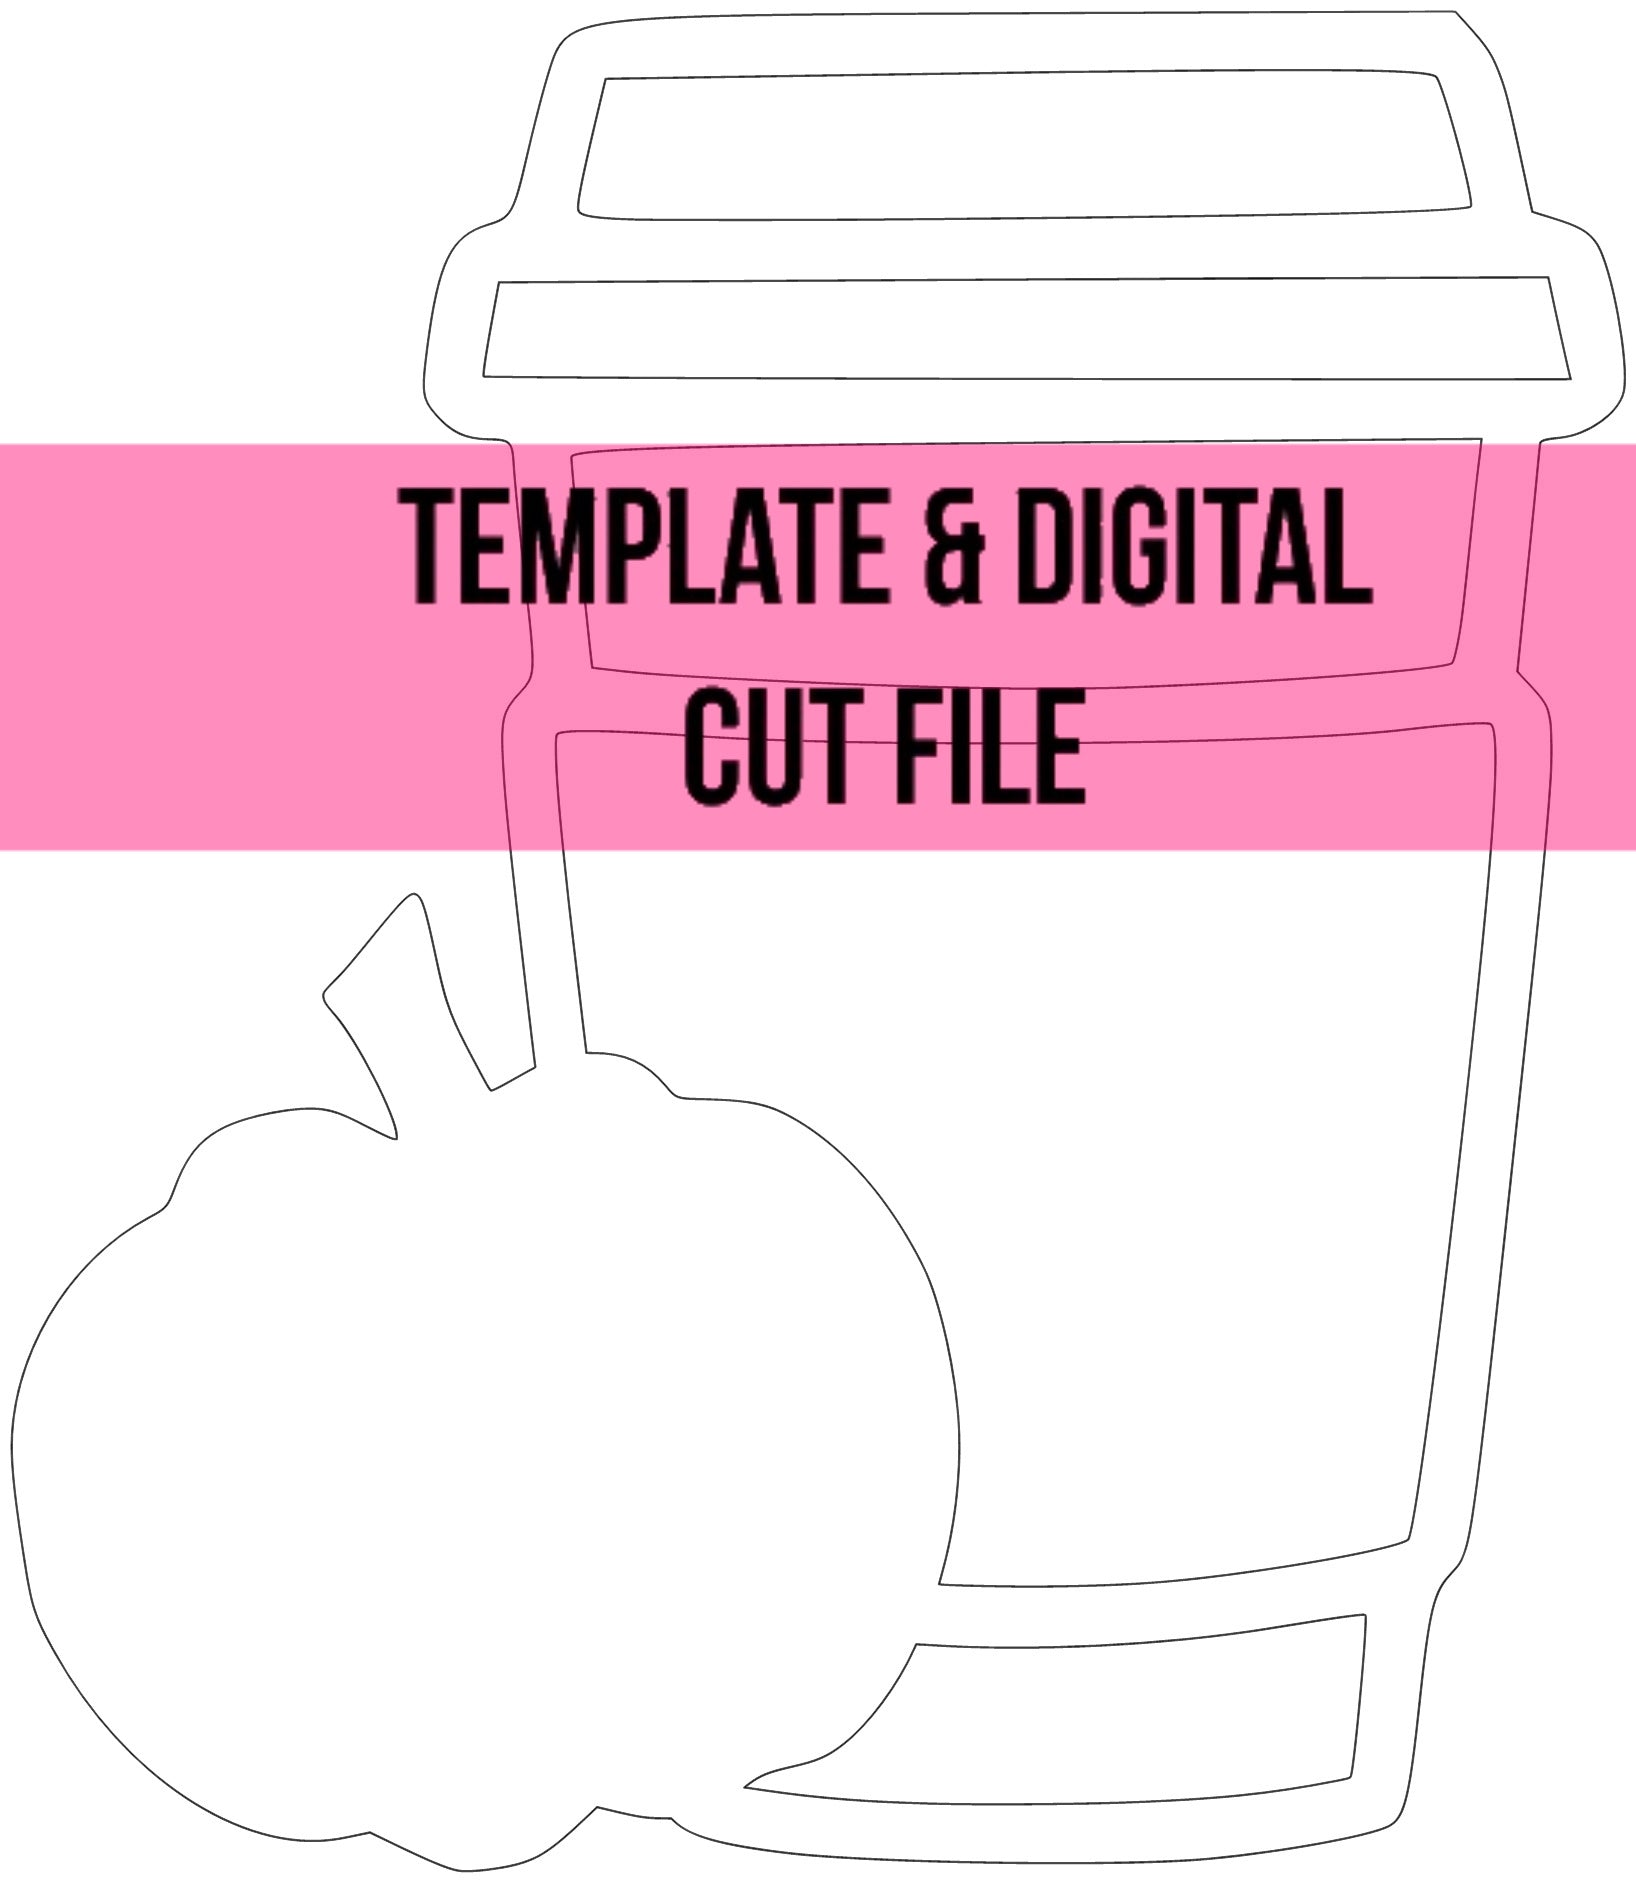 Pumpkin and Latte Template & Digital Cut File